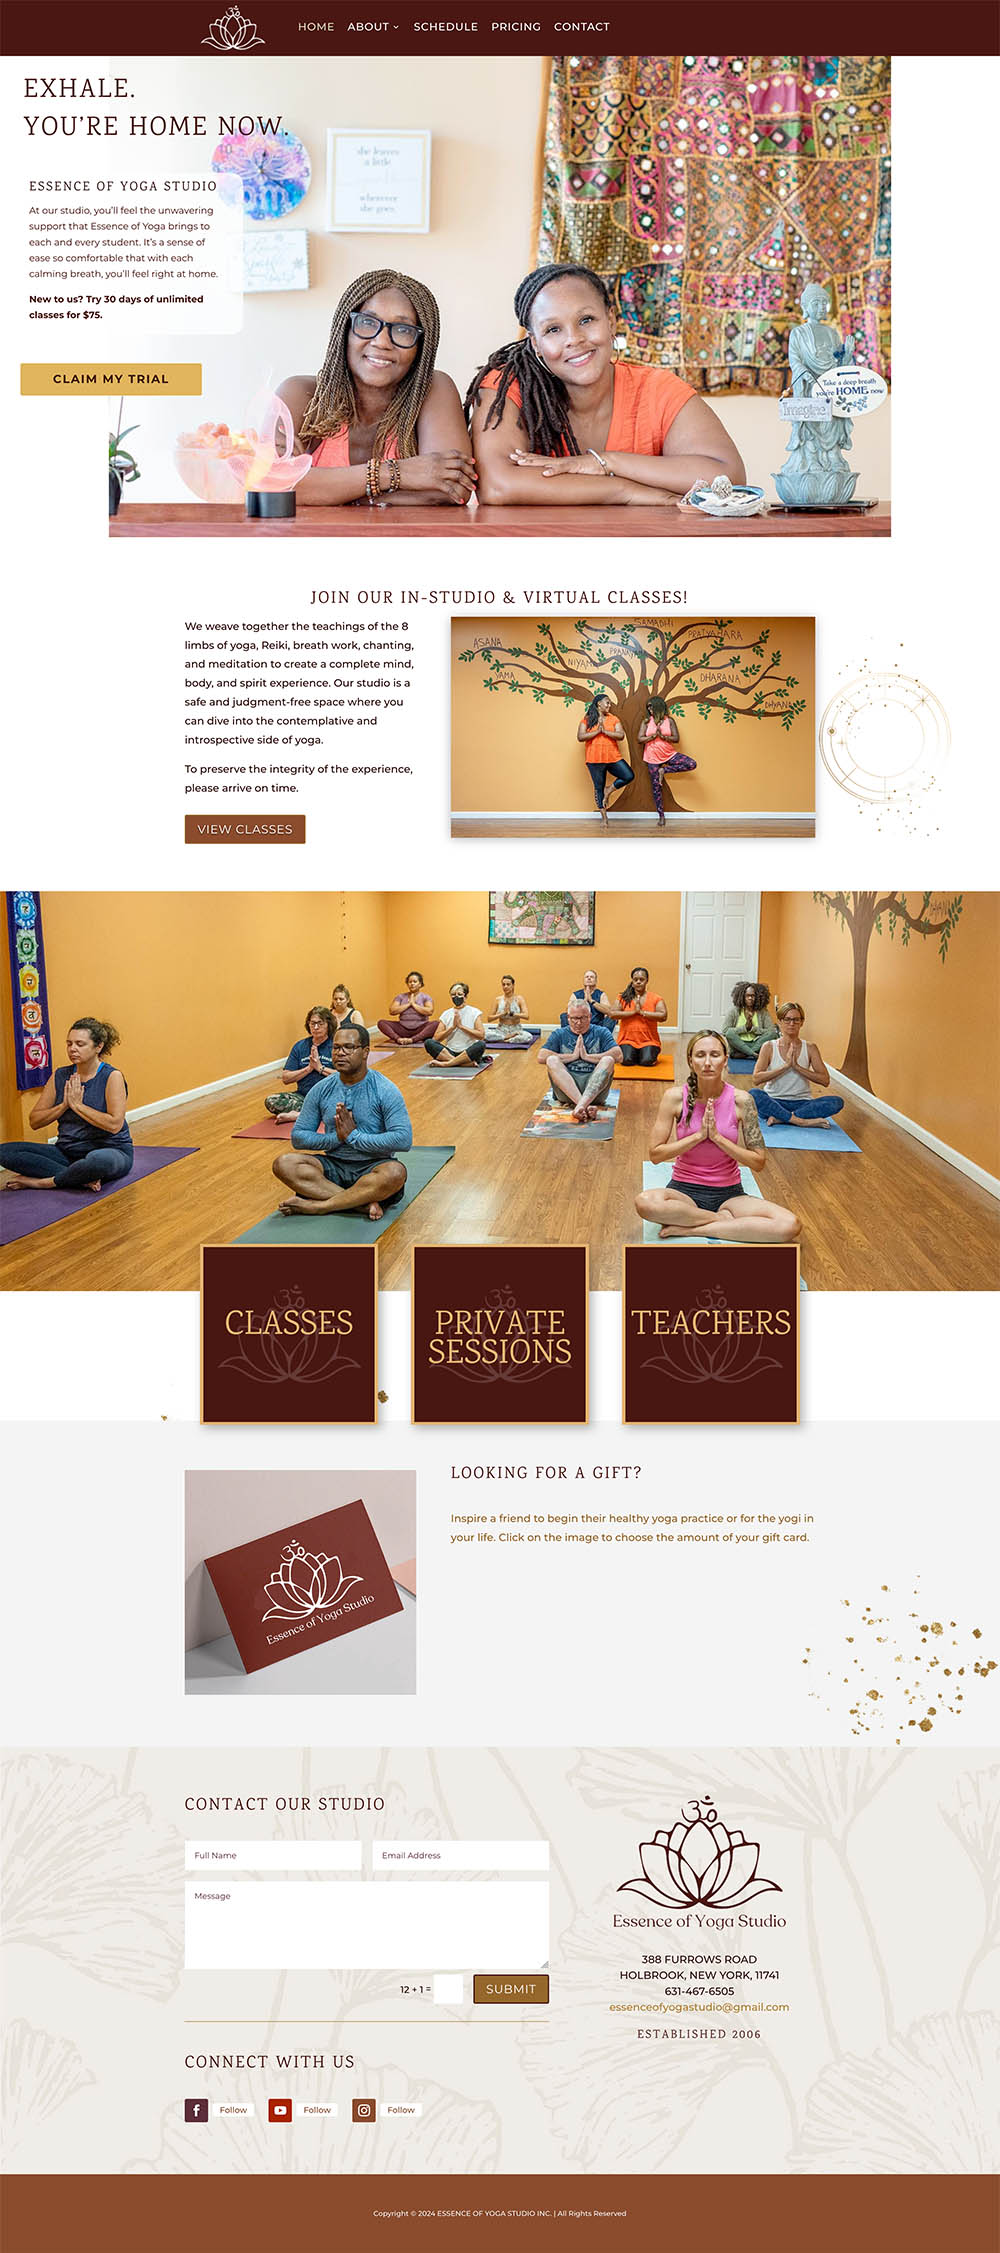 essence of yoga studio website redesign